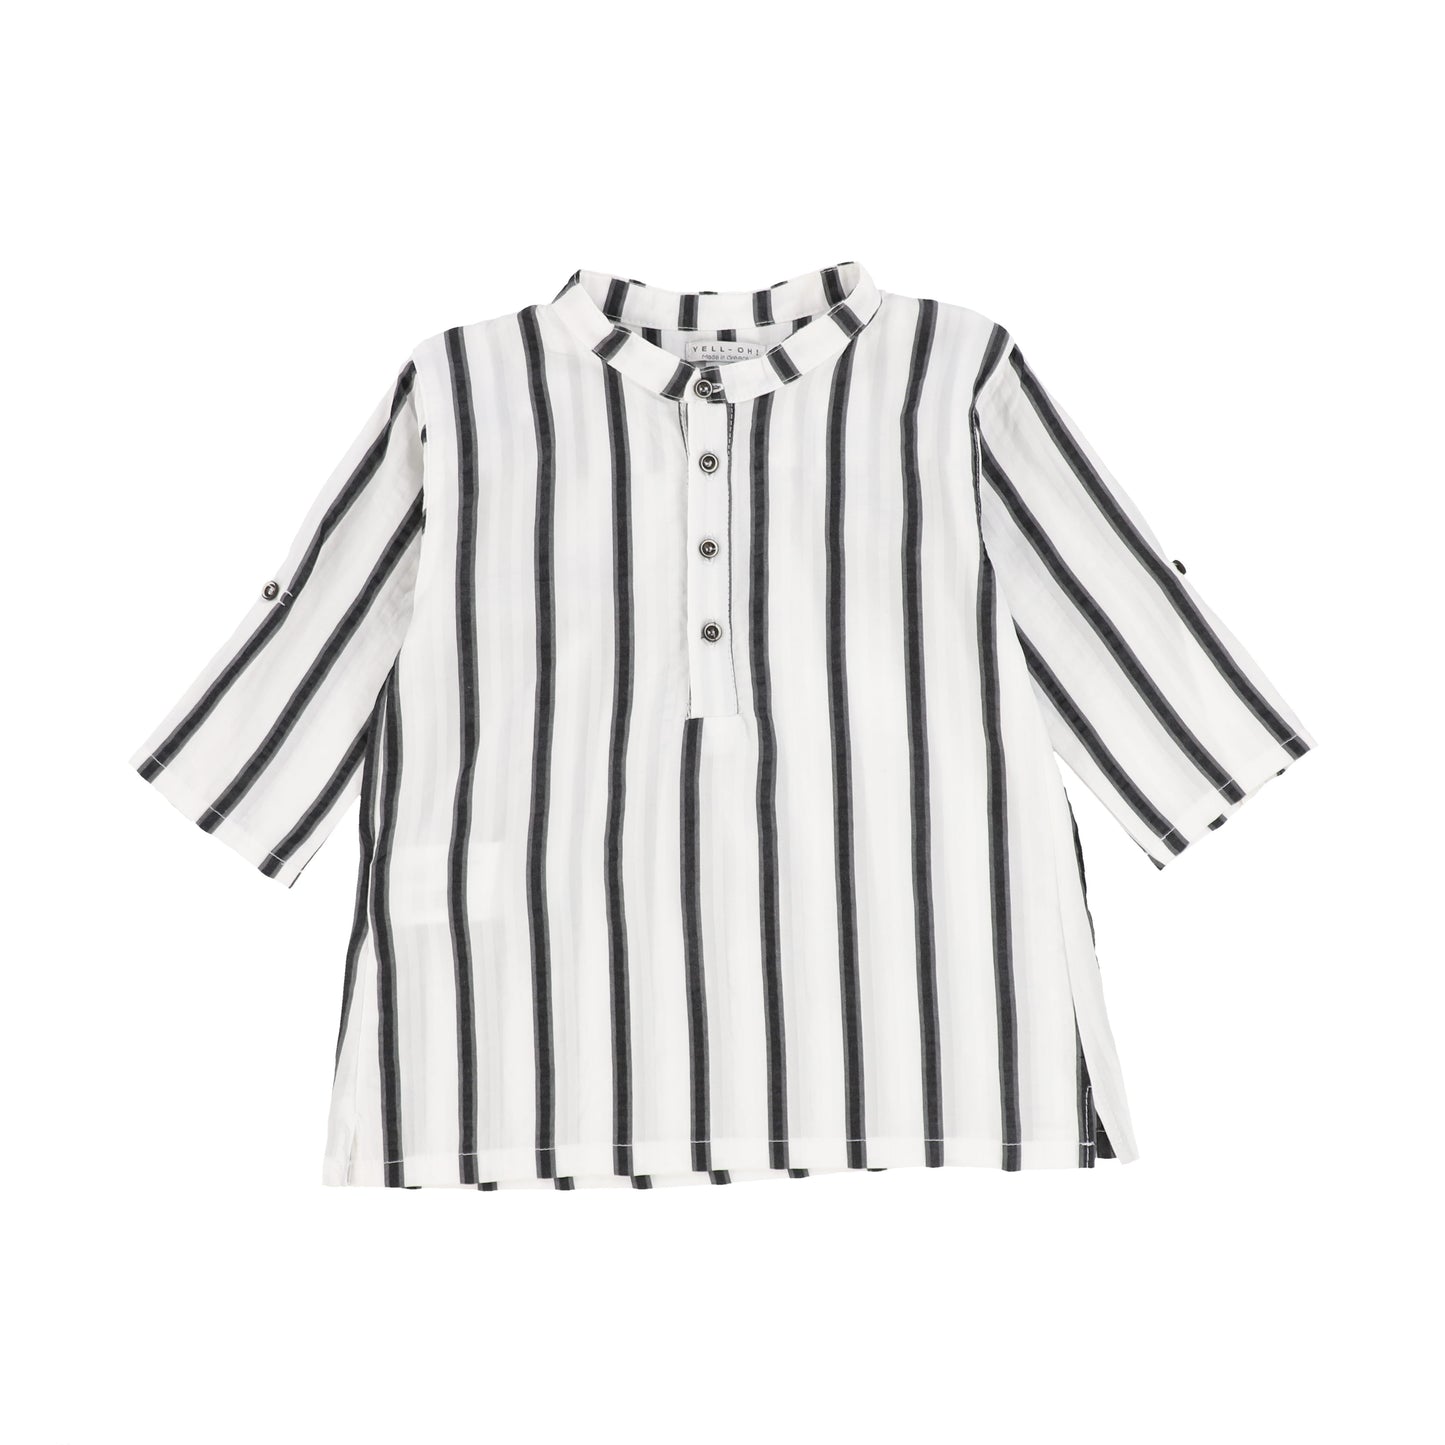 Yell Oh Black White Striped Shirt [Final Sale]